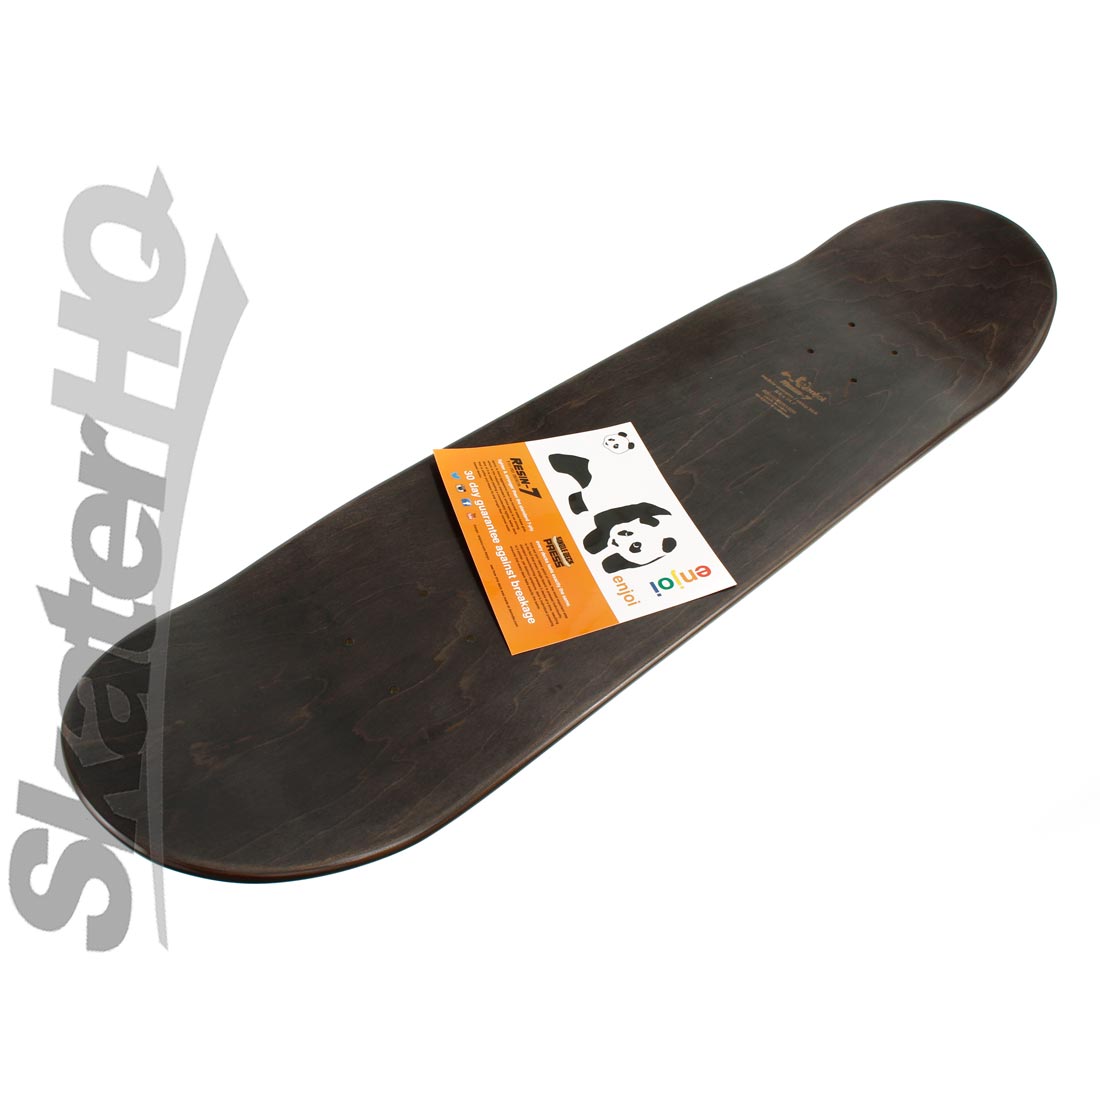 Enjoi Stardust 8.0 Deck - Black Skateboard Decks Modern Street